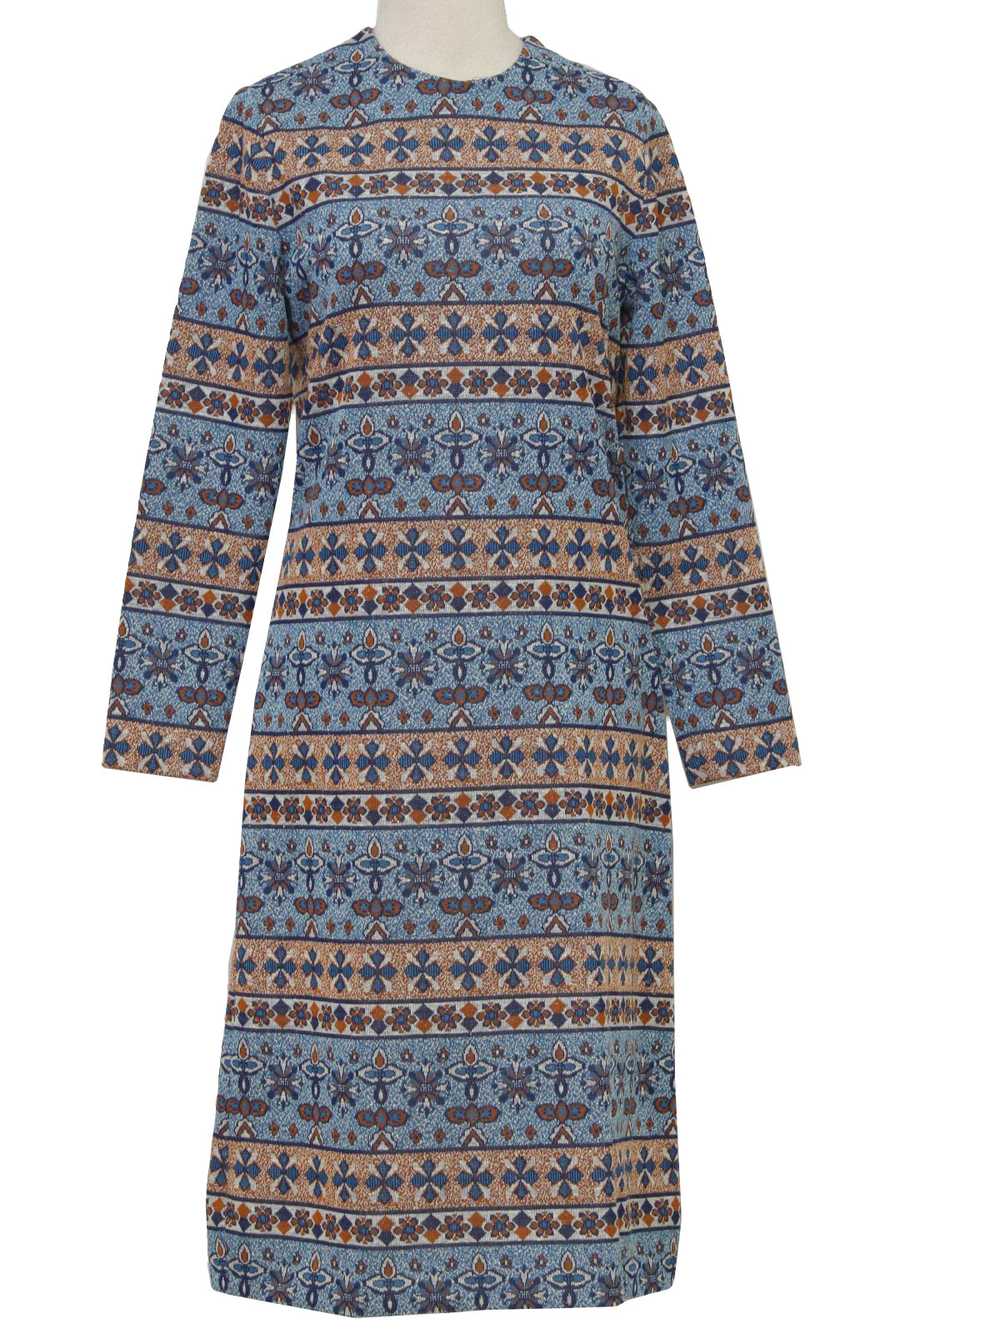 1970's Nardis Mod Knit Dress - image 1